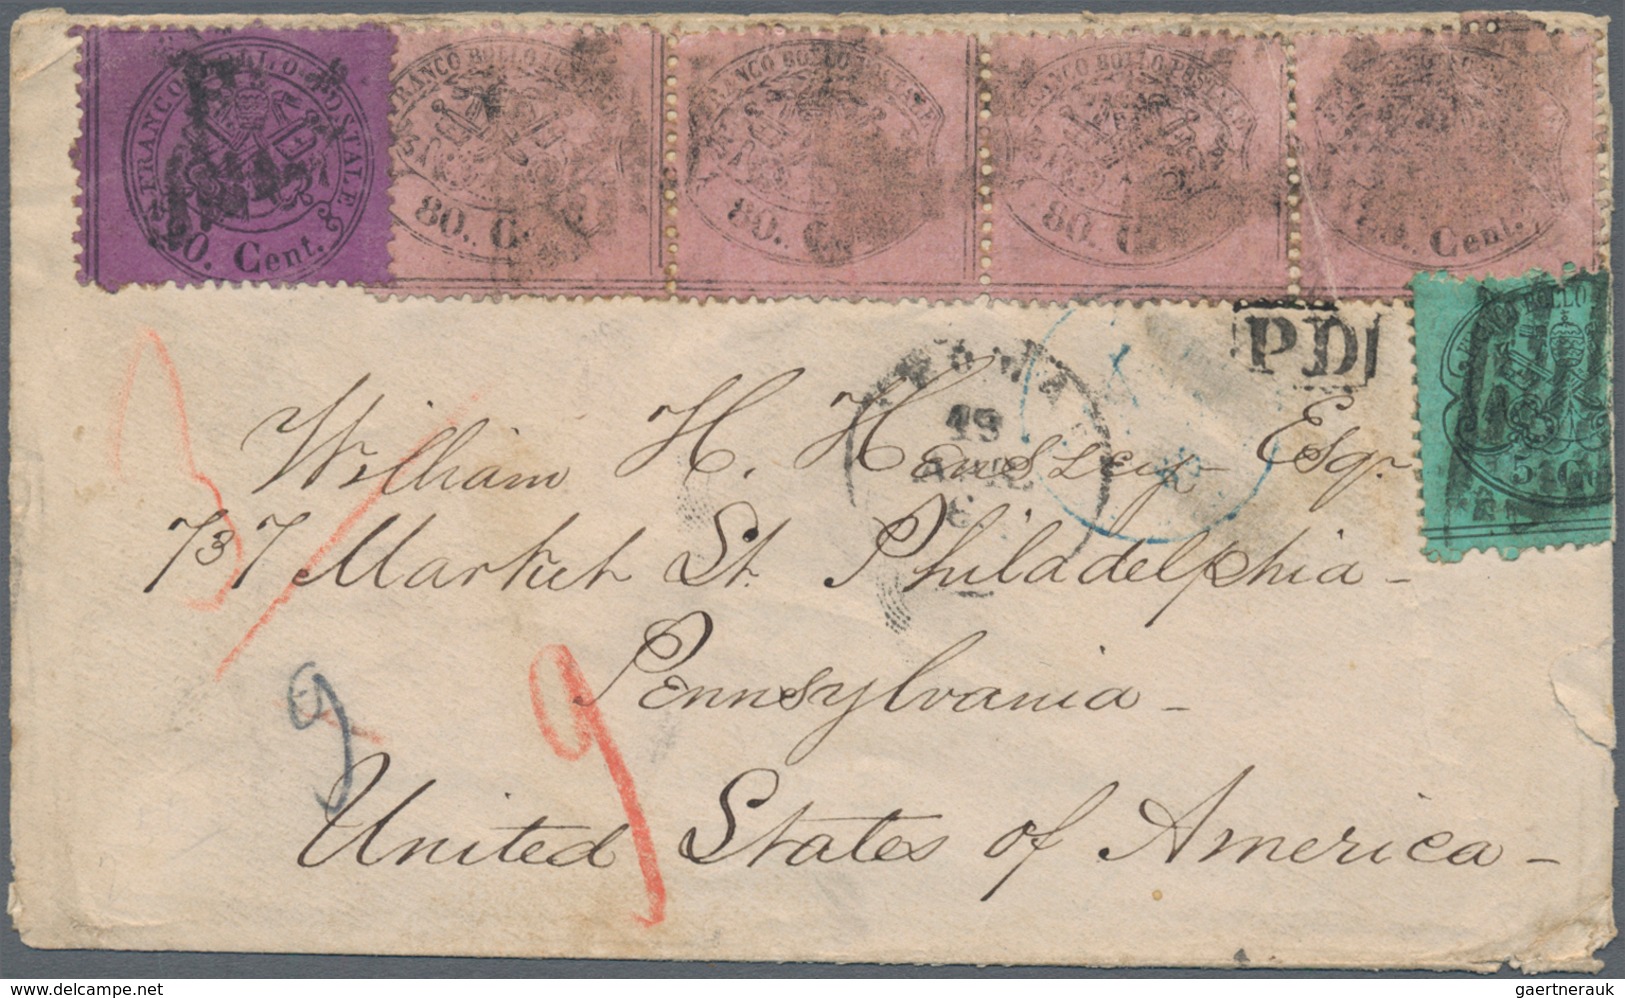 00727 Italien - Altitalienische Staaten: Kirchenstaat: 1868, 80 Cents Light Pink, Horizontal Stripe Of Fou - Stato Pontificio